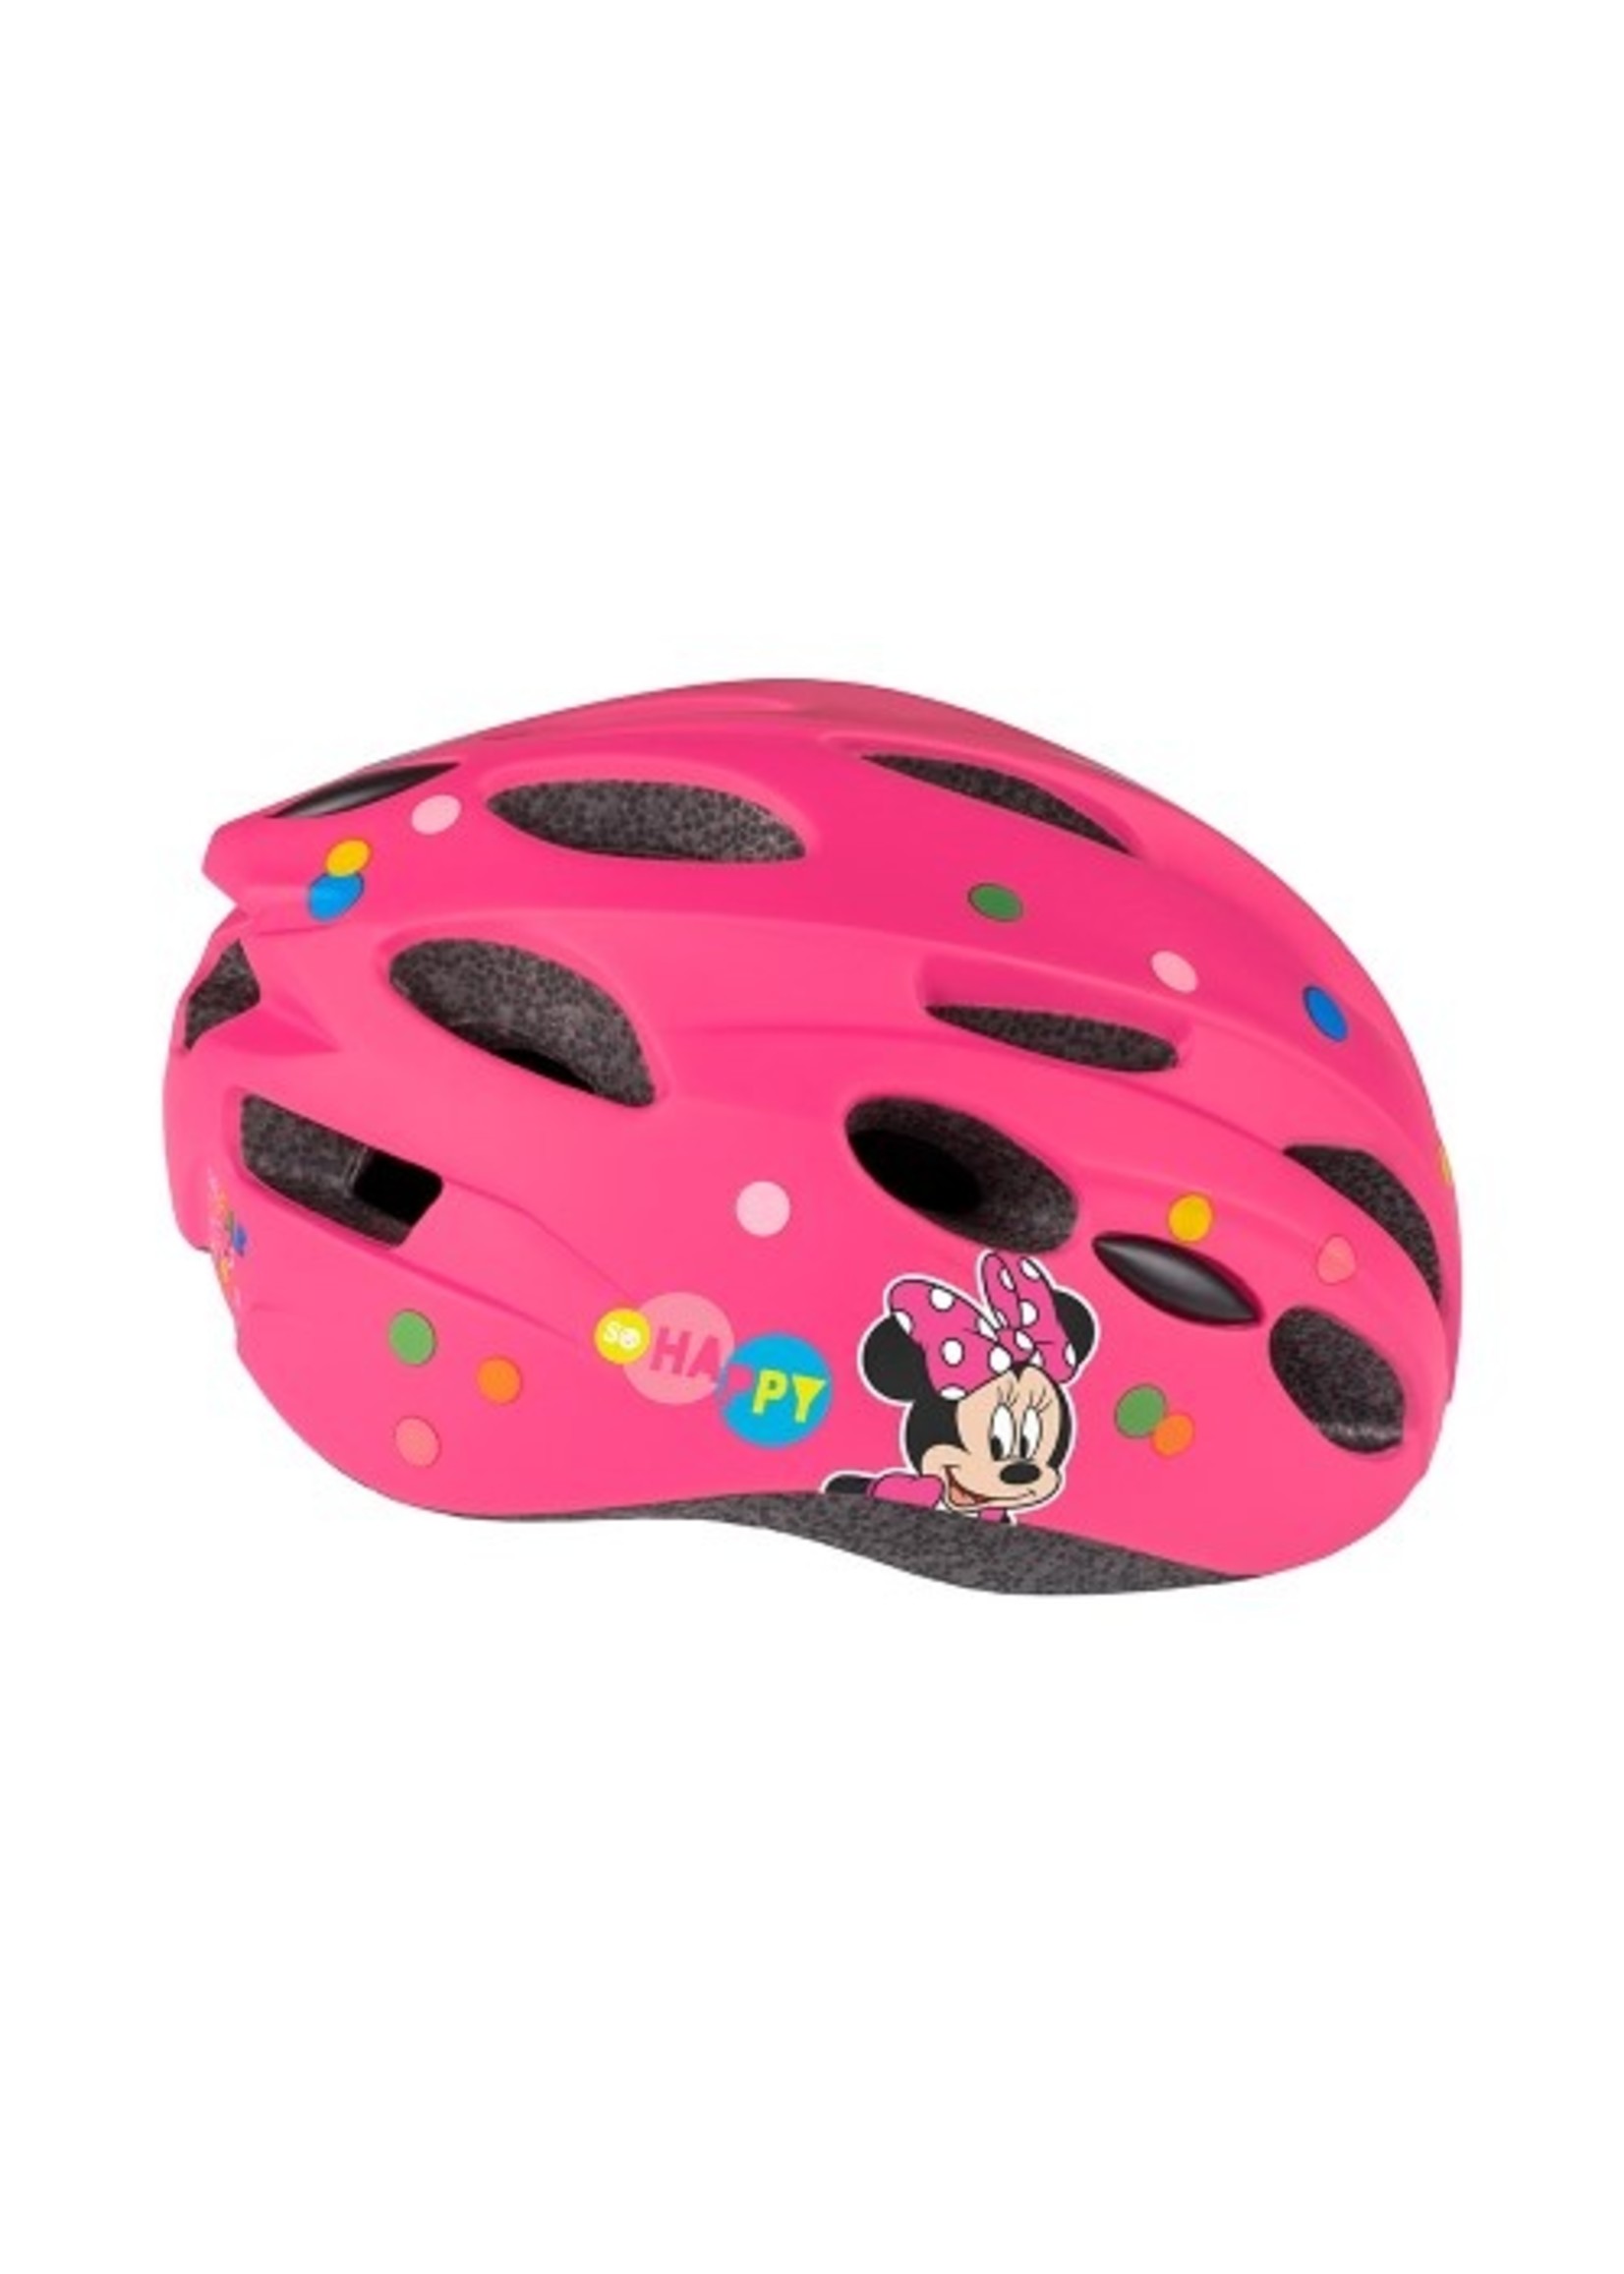 Disney junior Minnie Mouse bicycle helmet from Disney pink